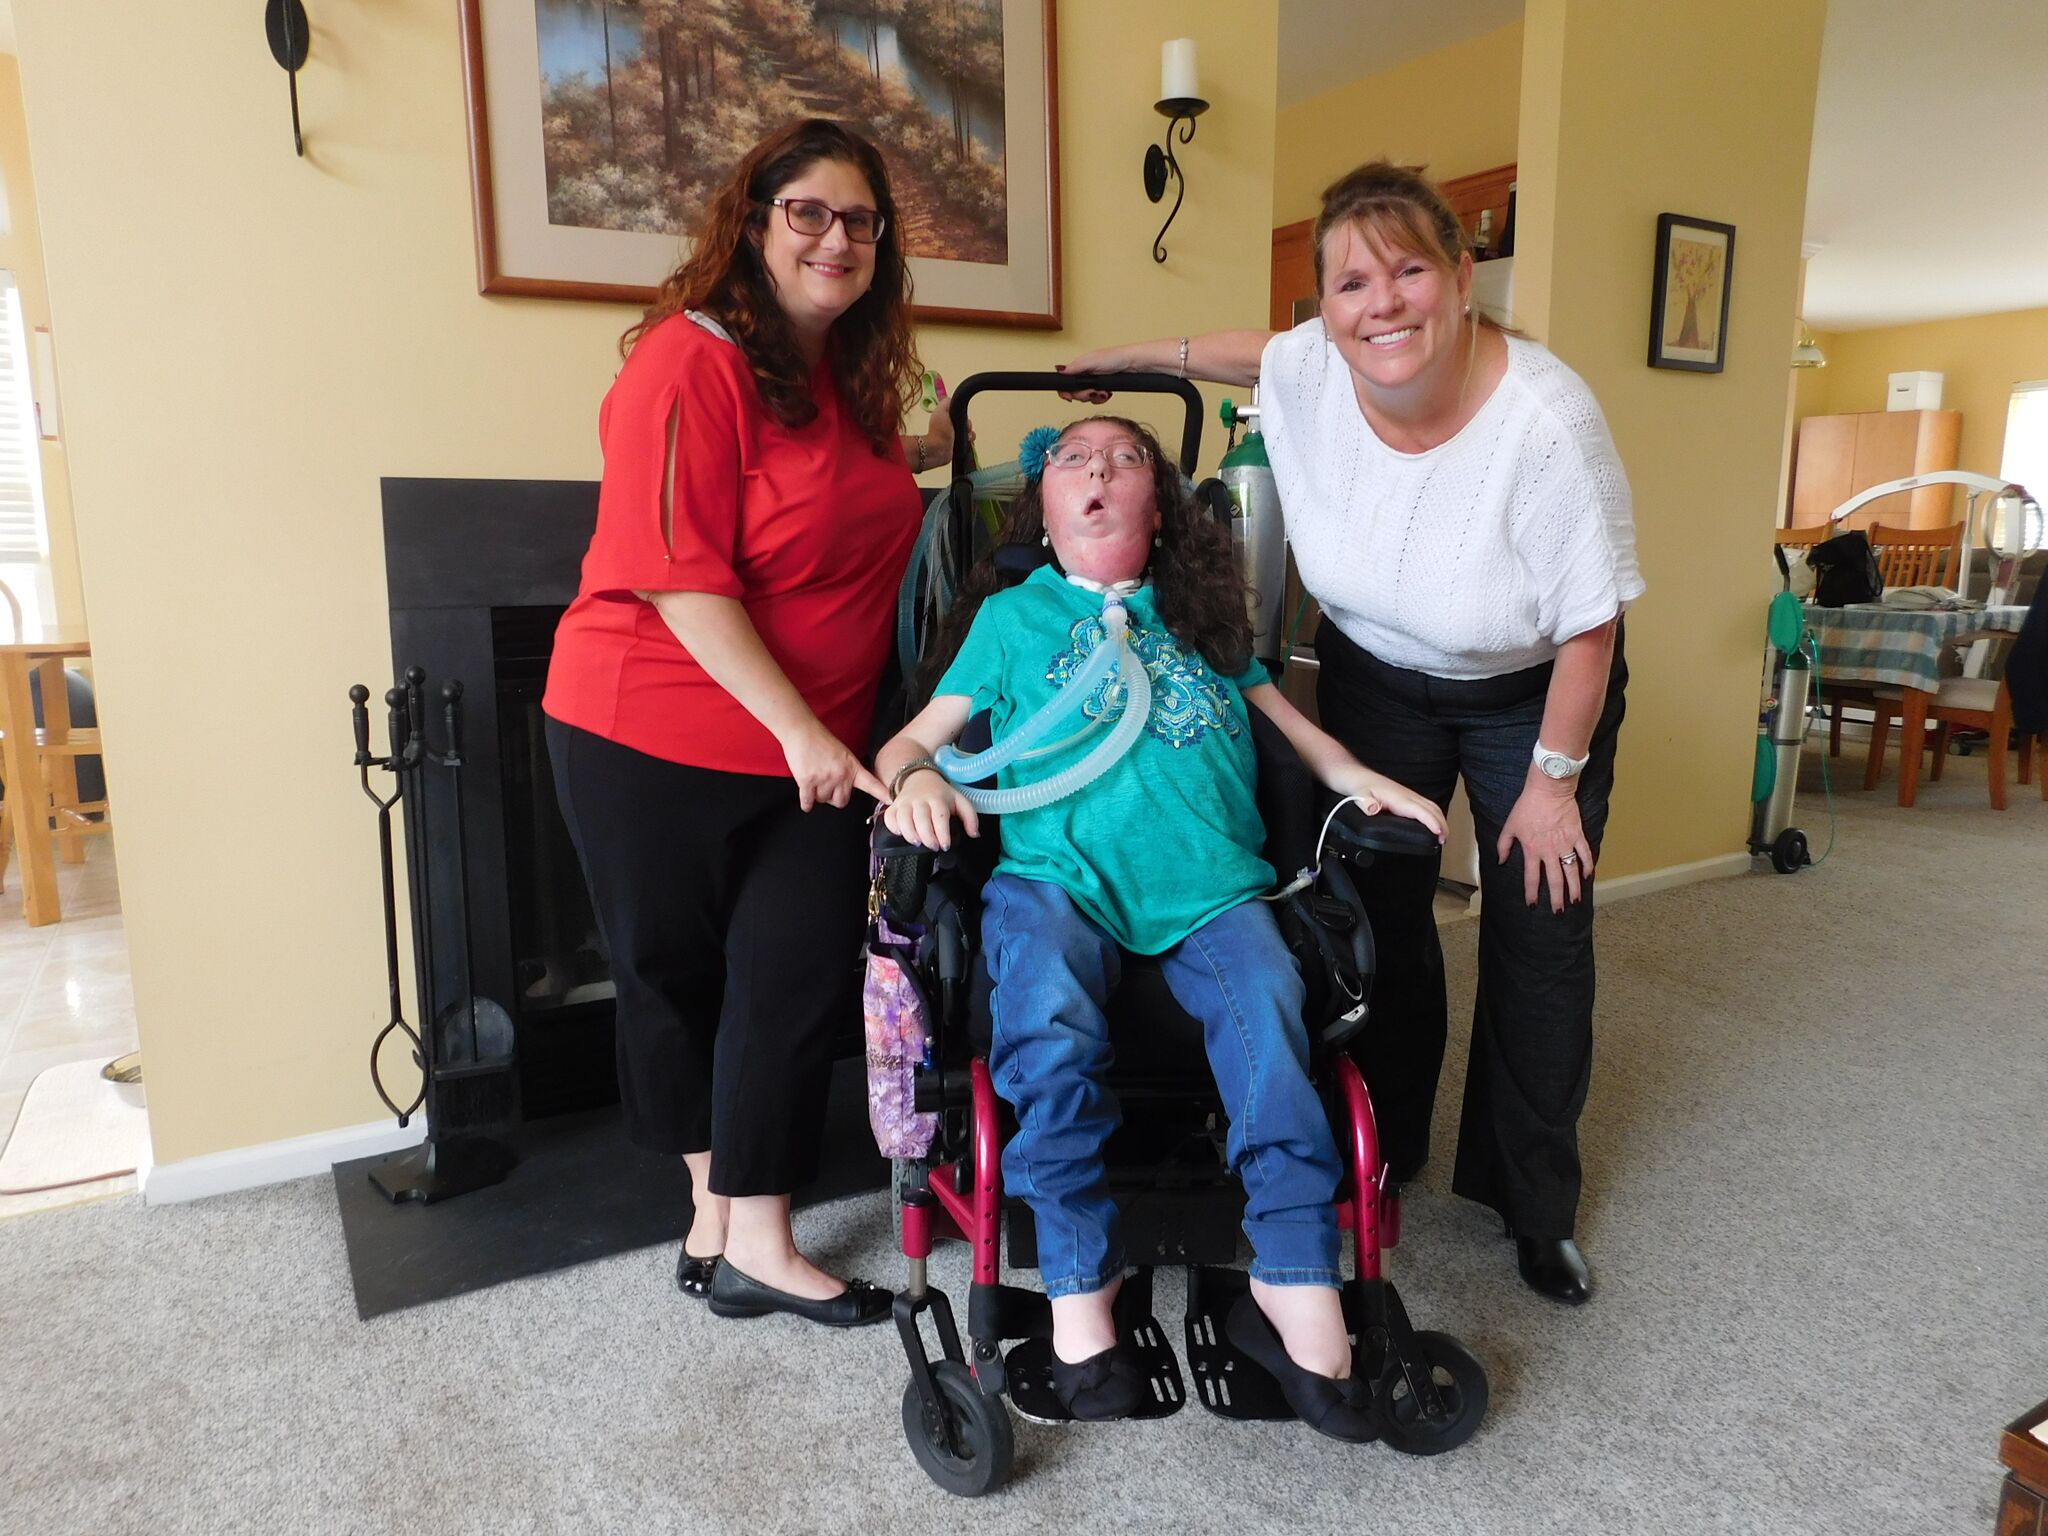 NJ Assemblywoman Carol Murphy with home care advocate Tara and daughter Mary, who has SMA